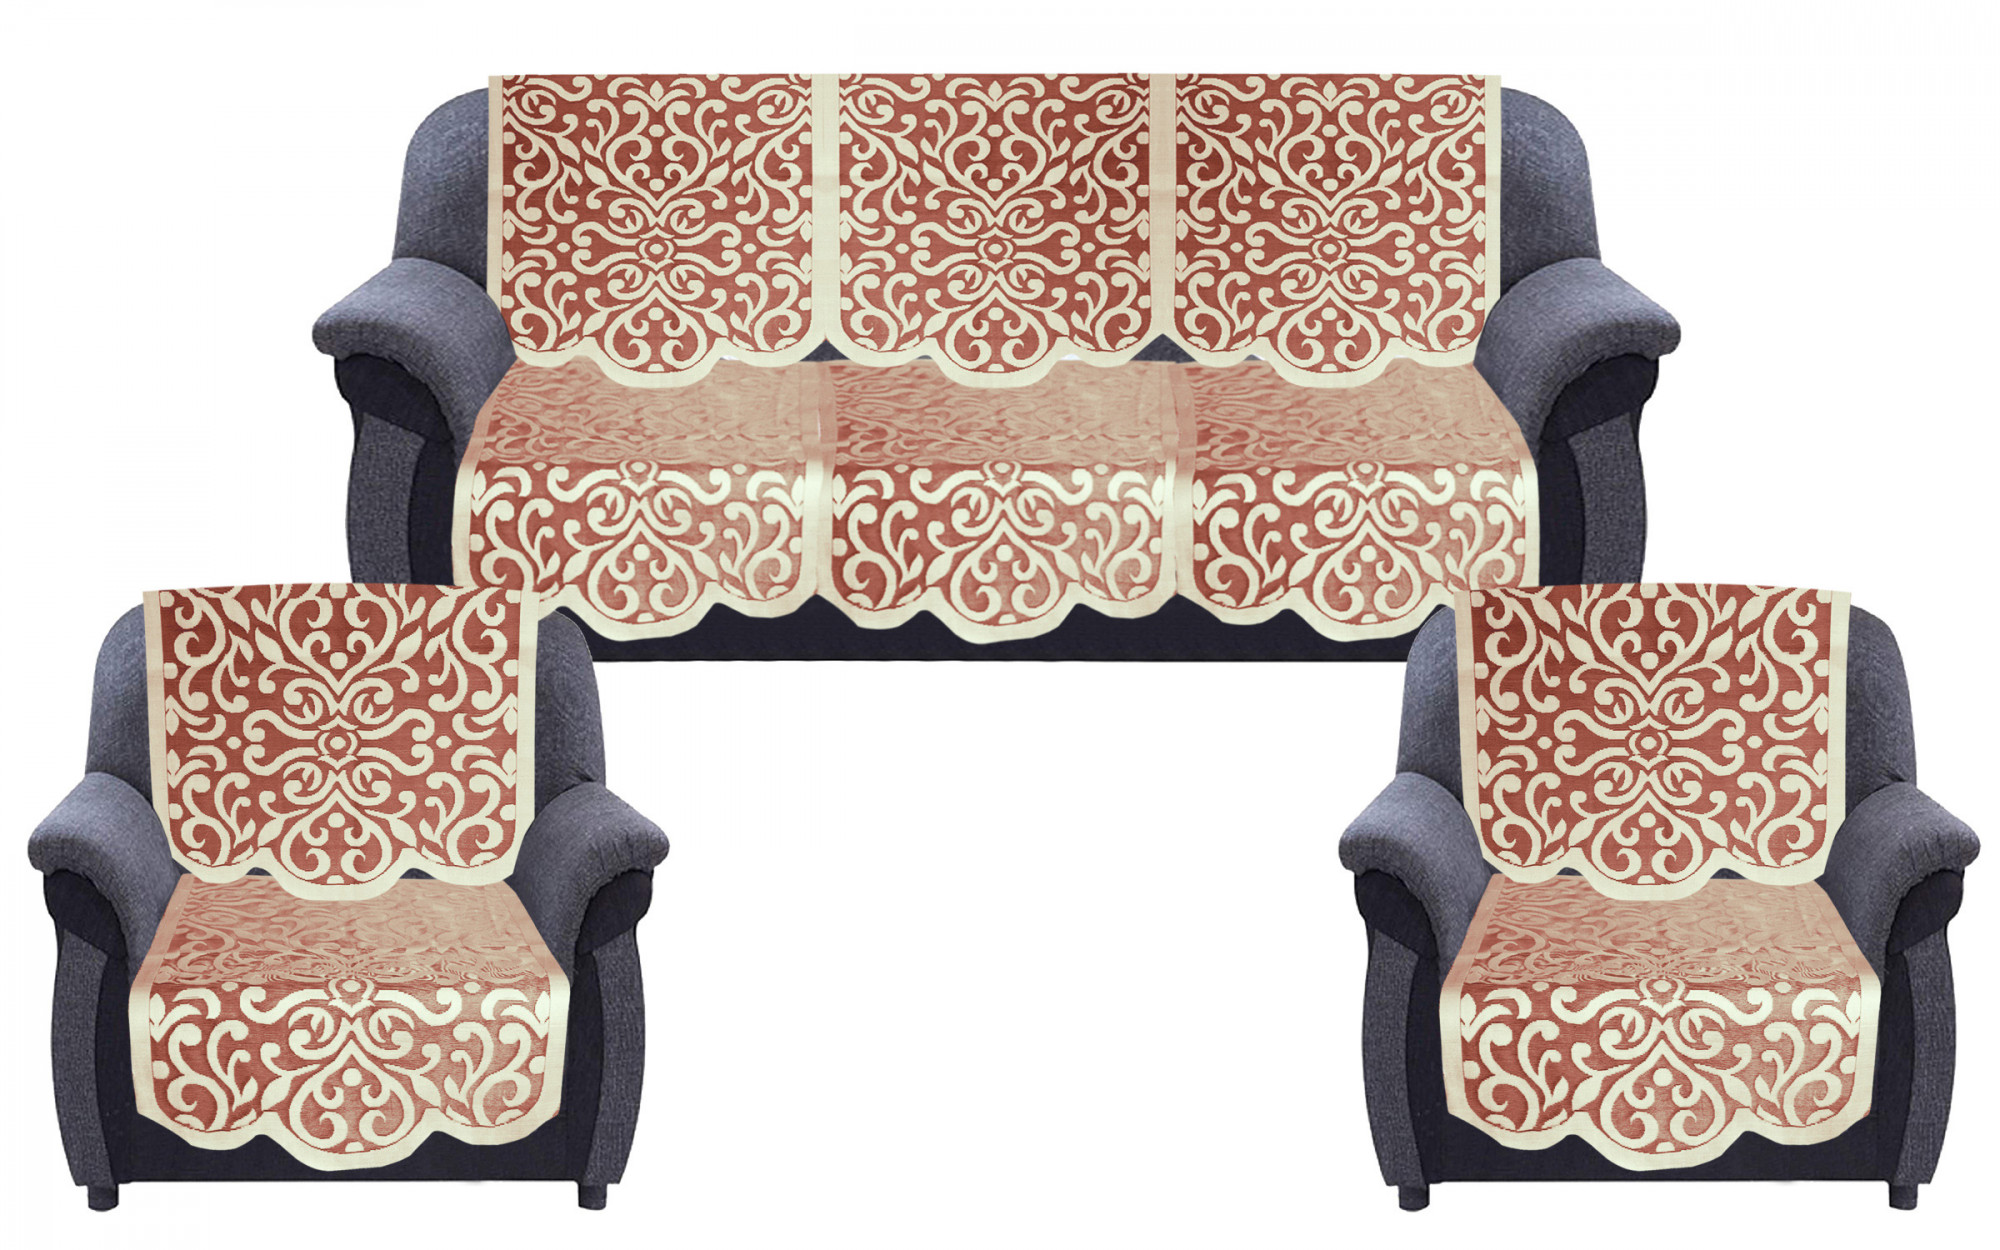 Kuber Industries Artcam Design 5 Seater Cotton Sofa Cover Set (Maroon)